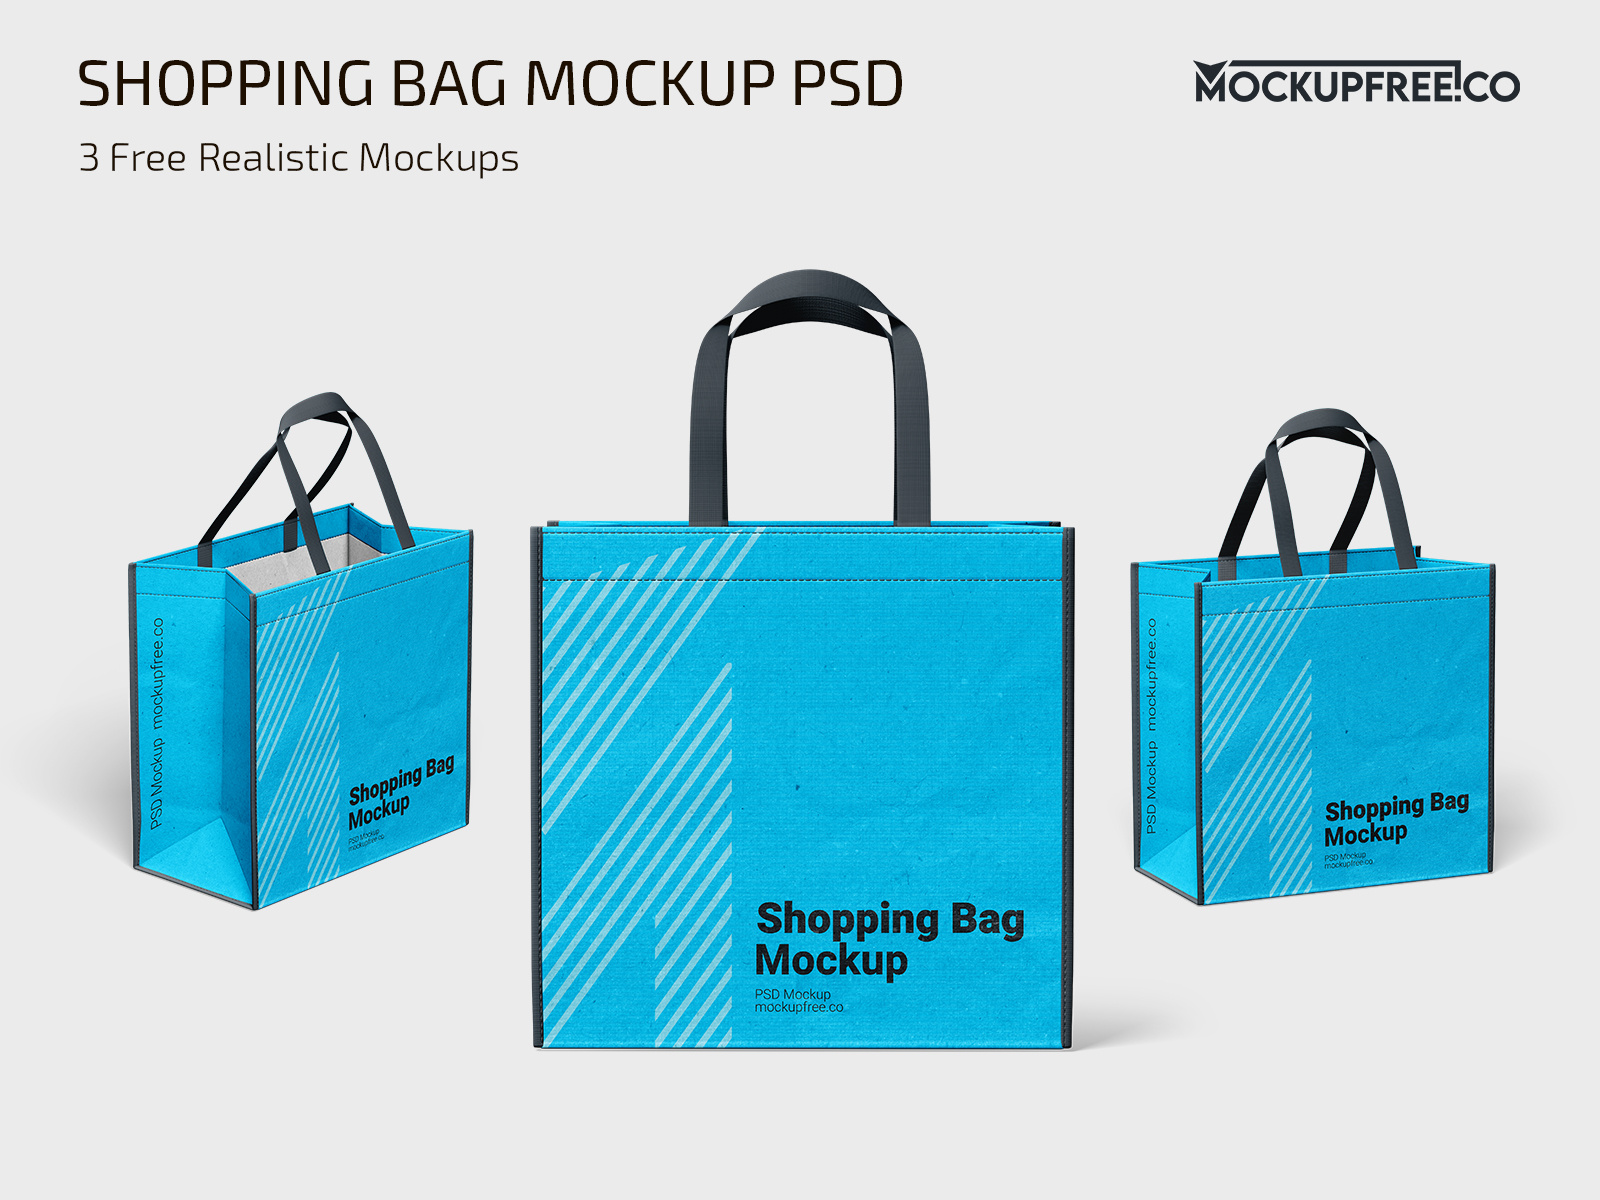 Free Kraft Paper Bag With Coffee Cup Mockup PSD - Good Mockups